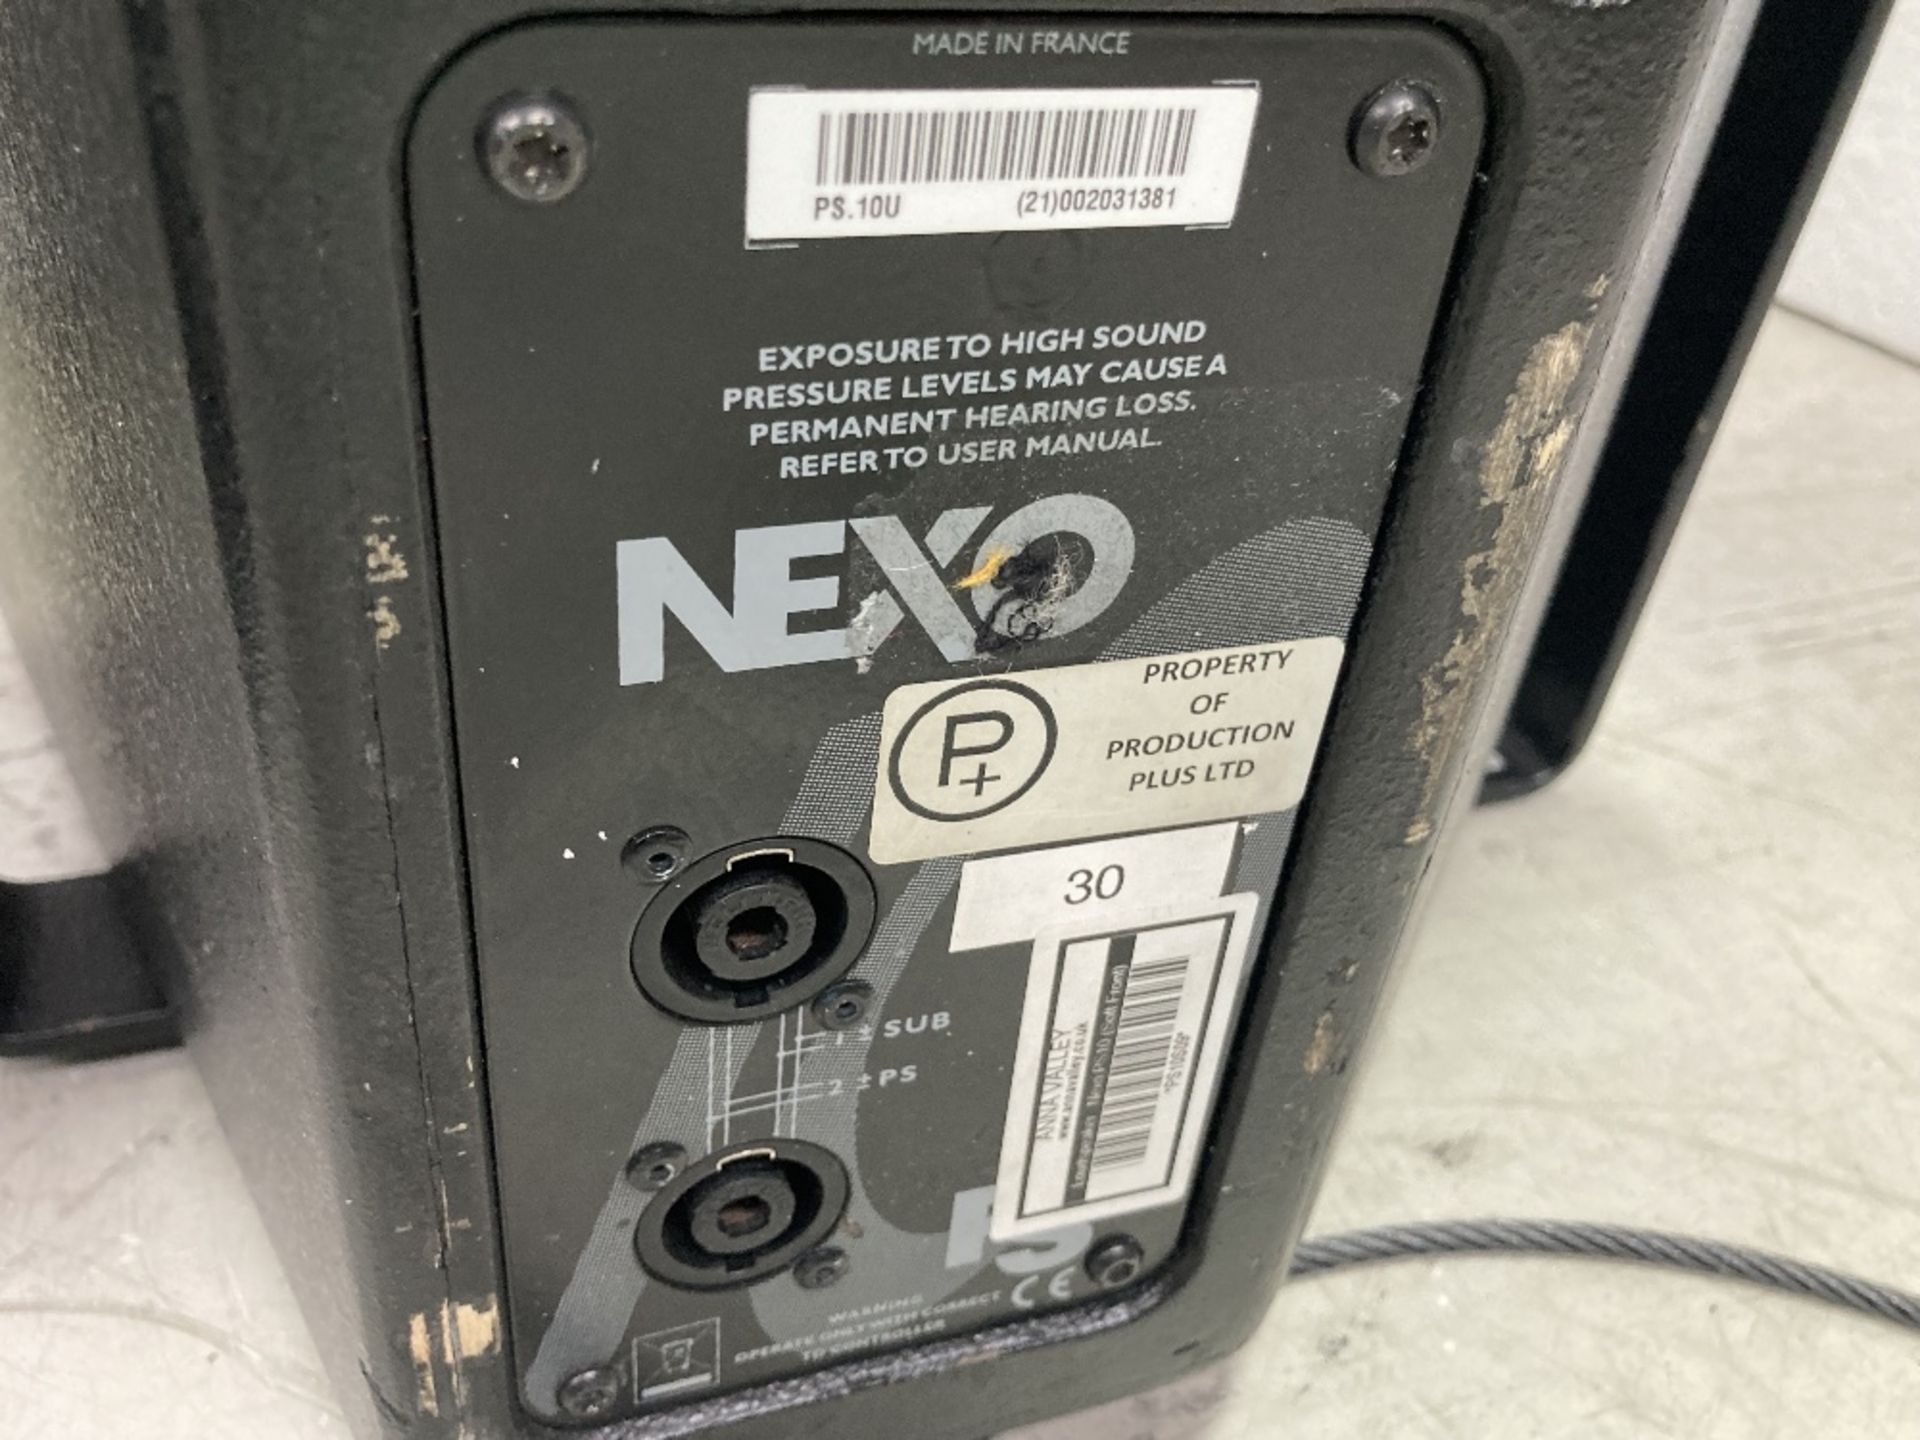 (2) Nexo PS10 Loudspeakers, Foam Front, Flying Frame & Heavy Duty Mobile Flight Case - Image 4 of 6